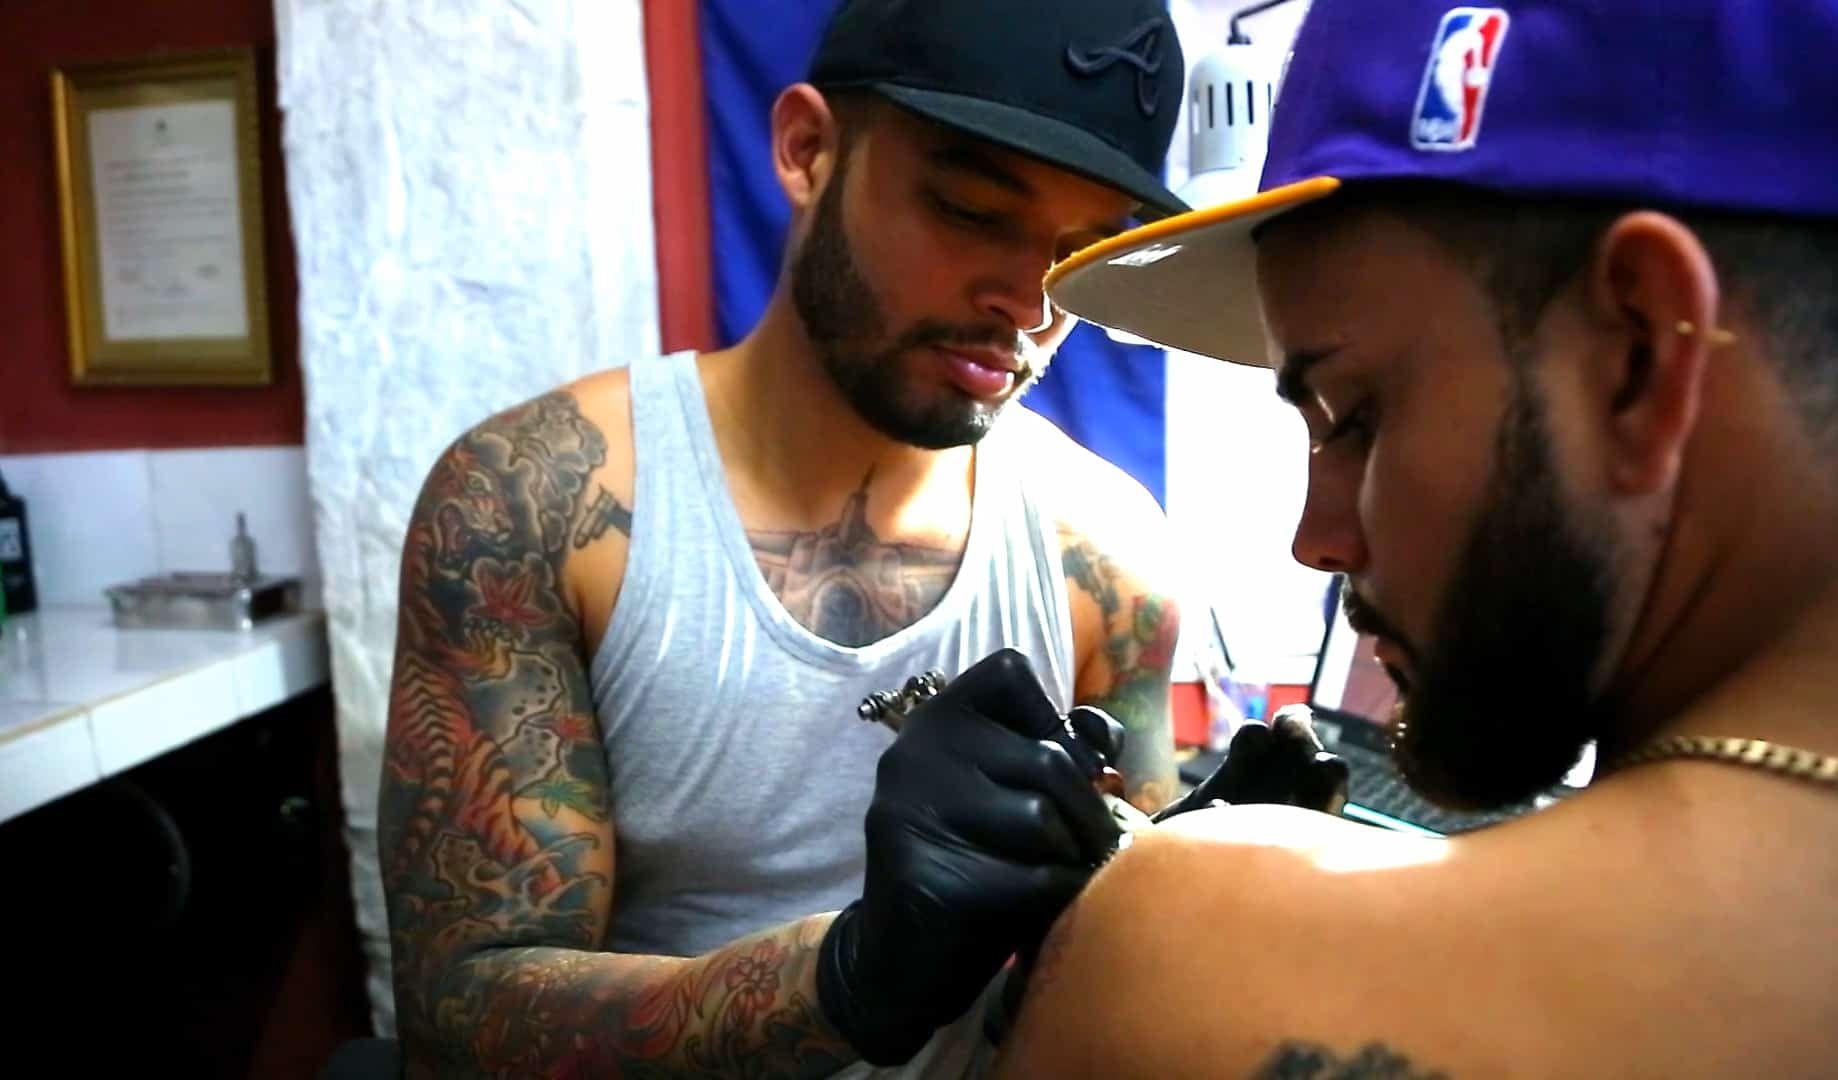 Tatuajes: ¿marginalidad, moda o arte?